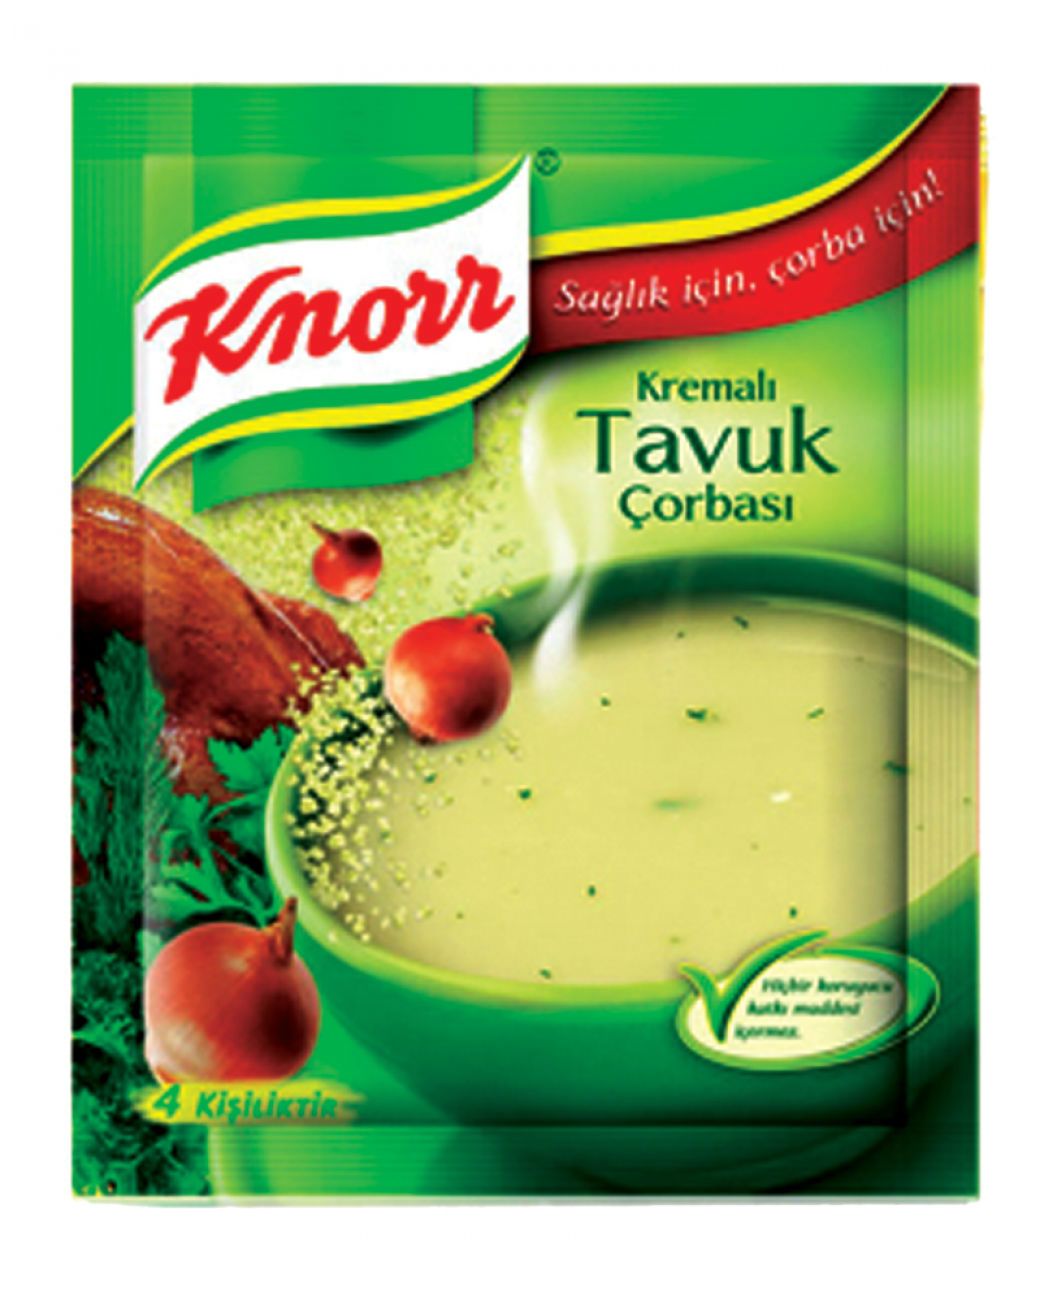 Knorr Kremali Tavuk Corbasi (69 G) - Aytac Foods